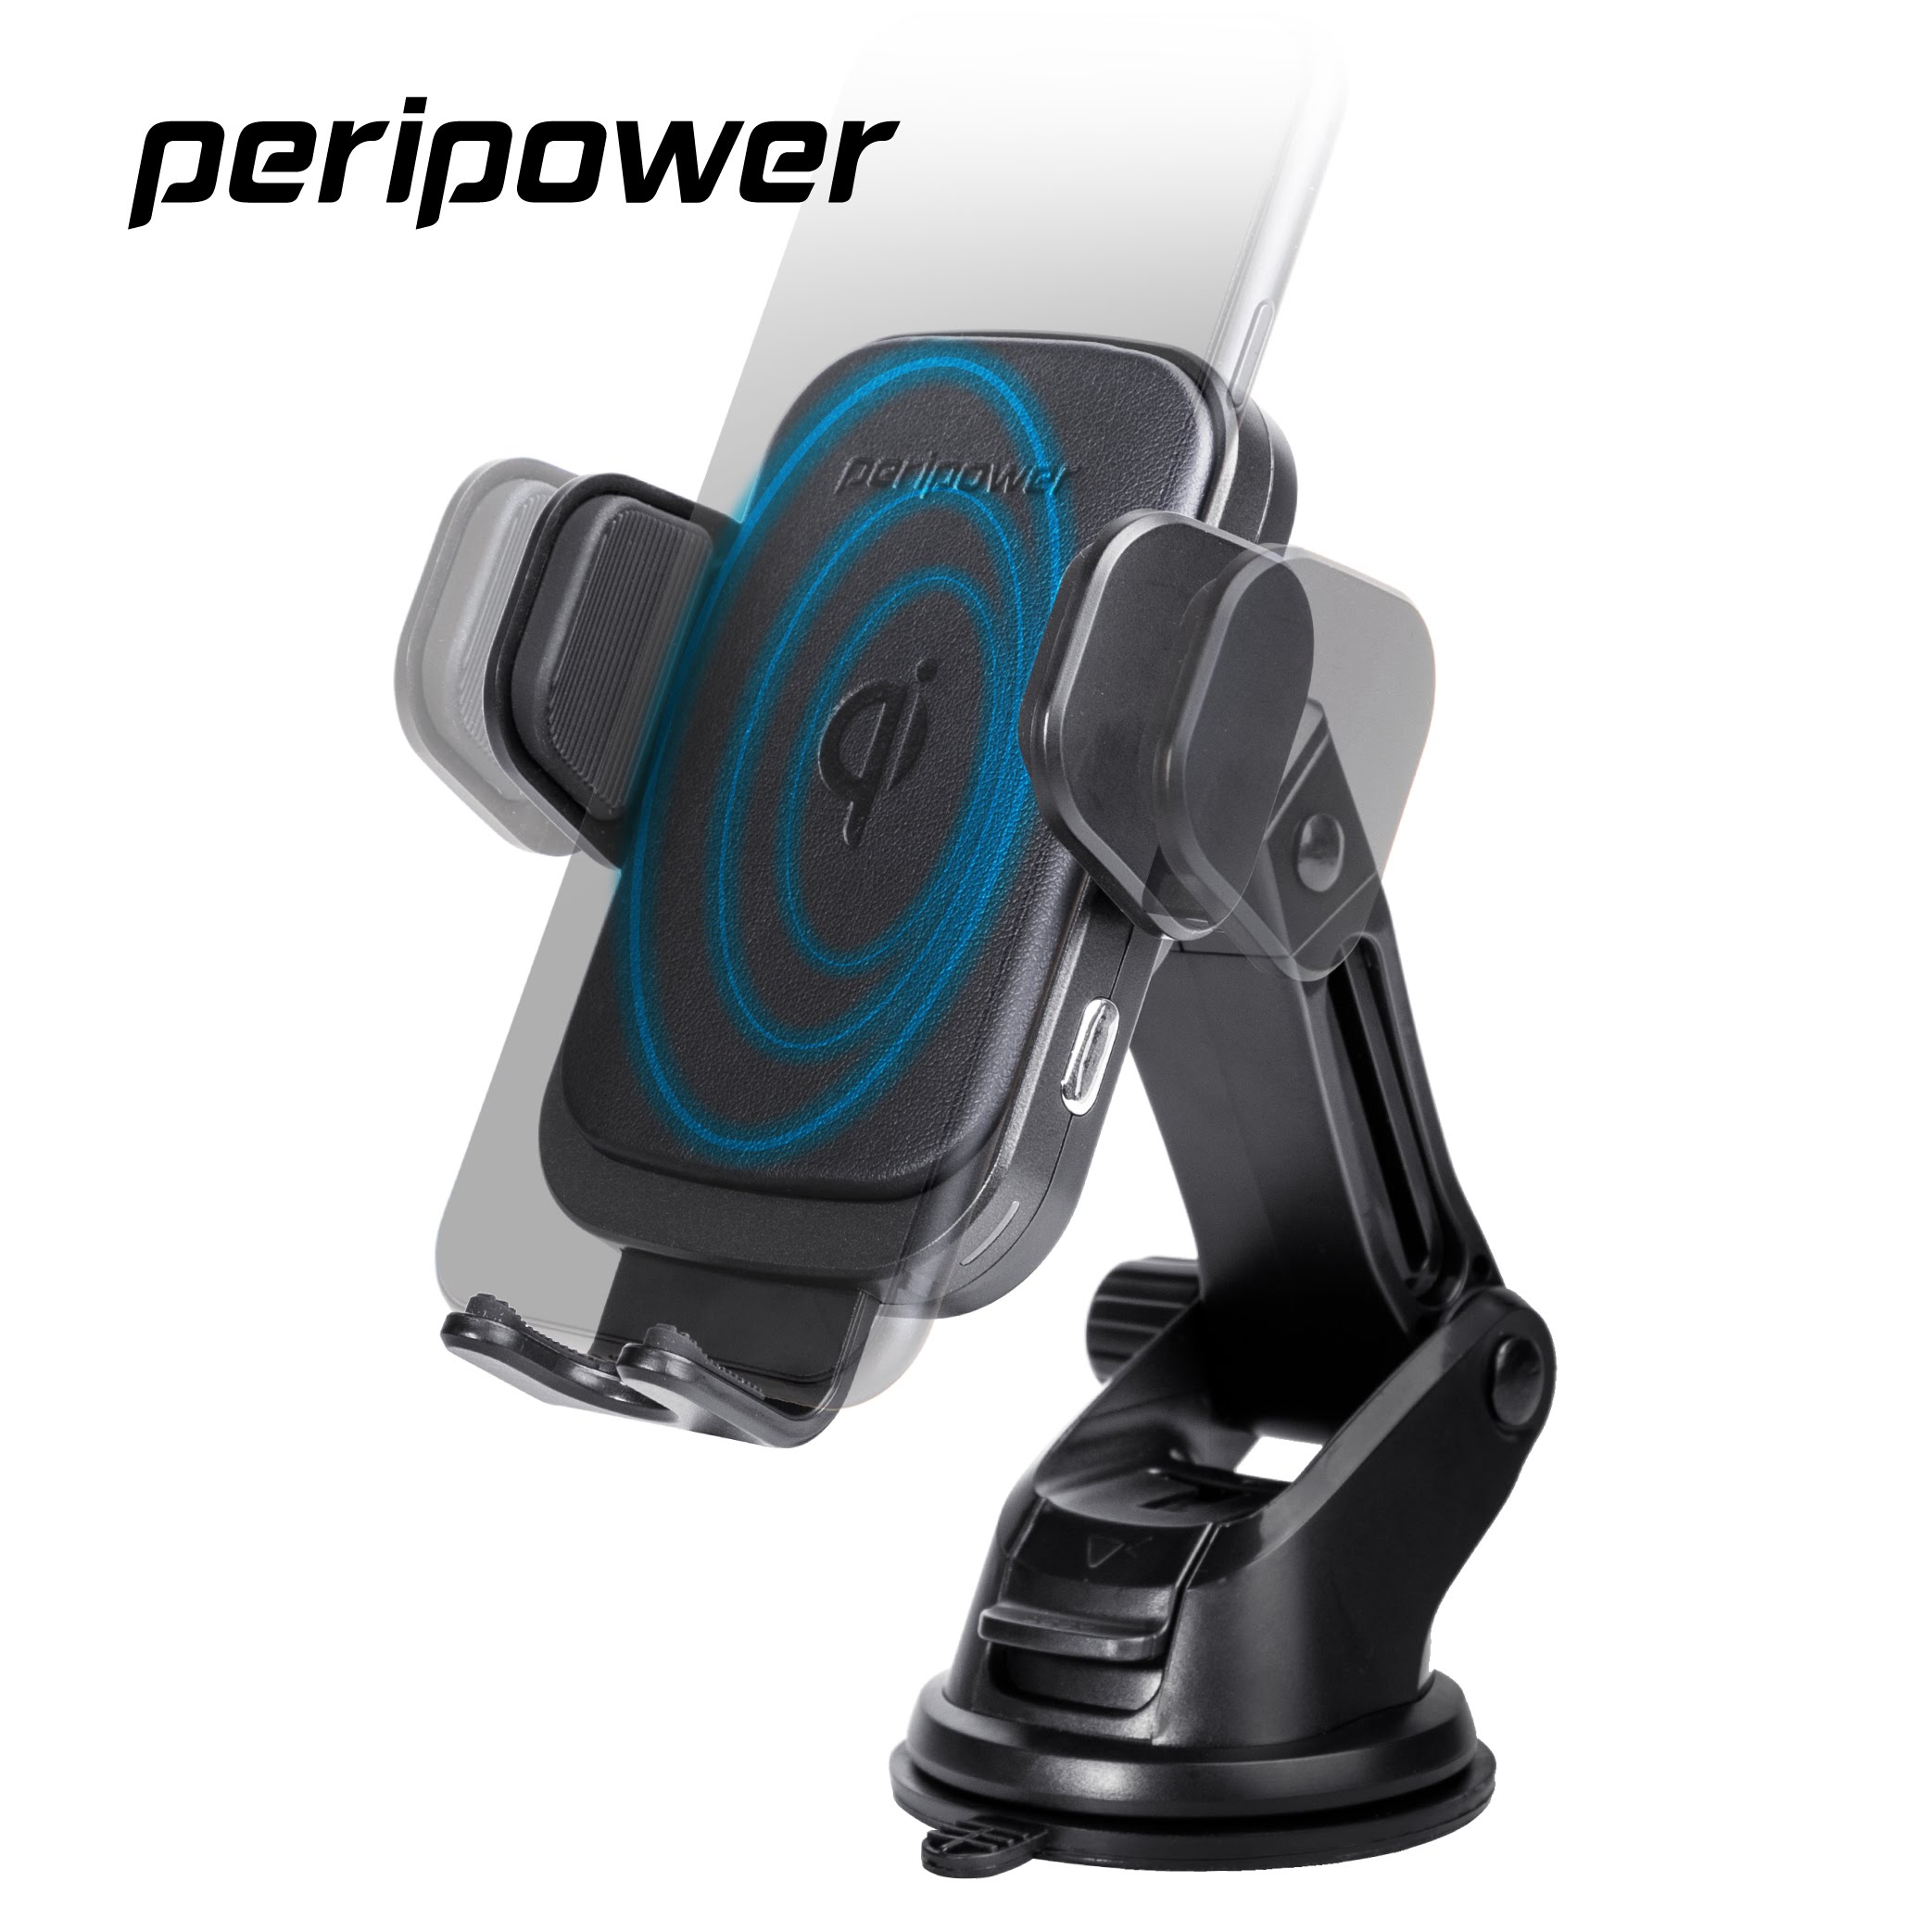 【peripower】PS-T09 自動開合夾臂式伸縮調整手機架 無線充電 手機座 手機支架 車用支架 出風口支架